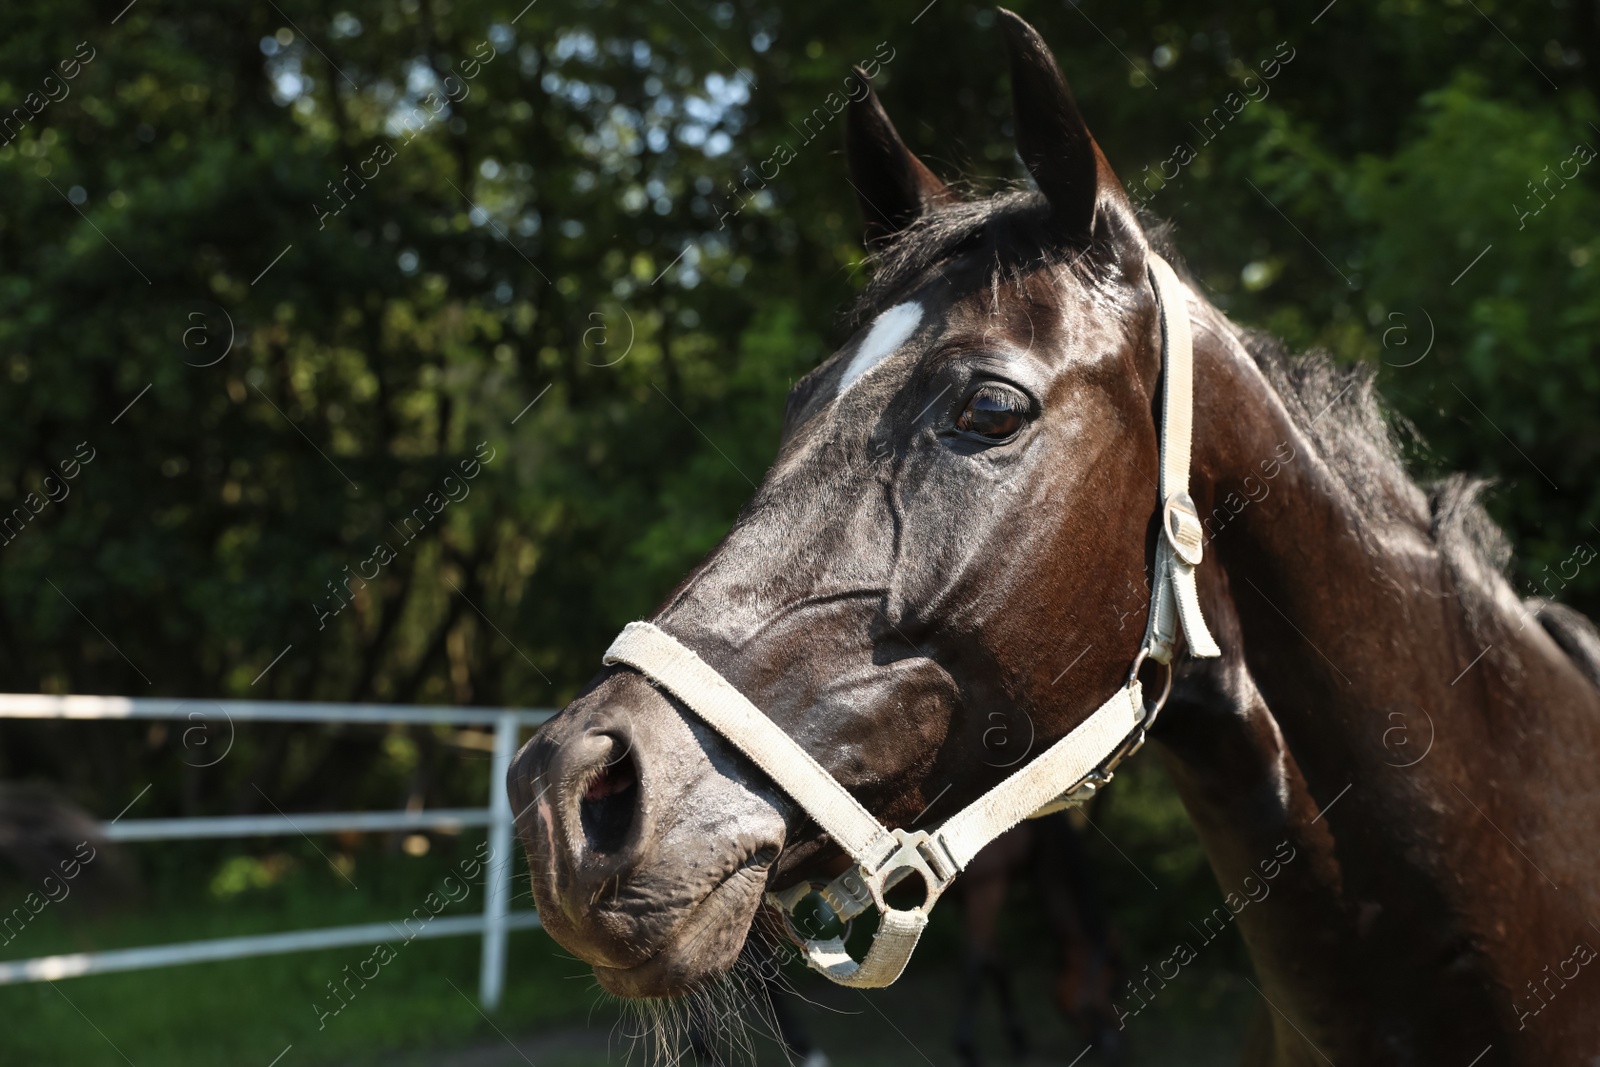 Photo of Dark bay horse in paddock on sunny day. Beautiful pet